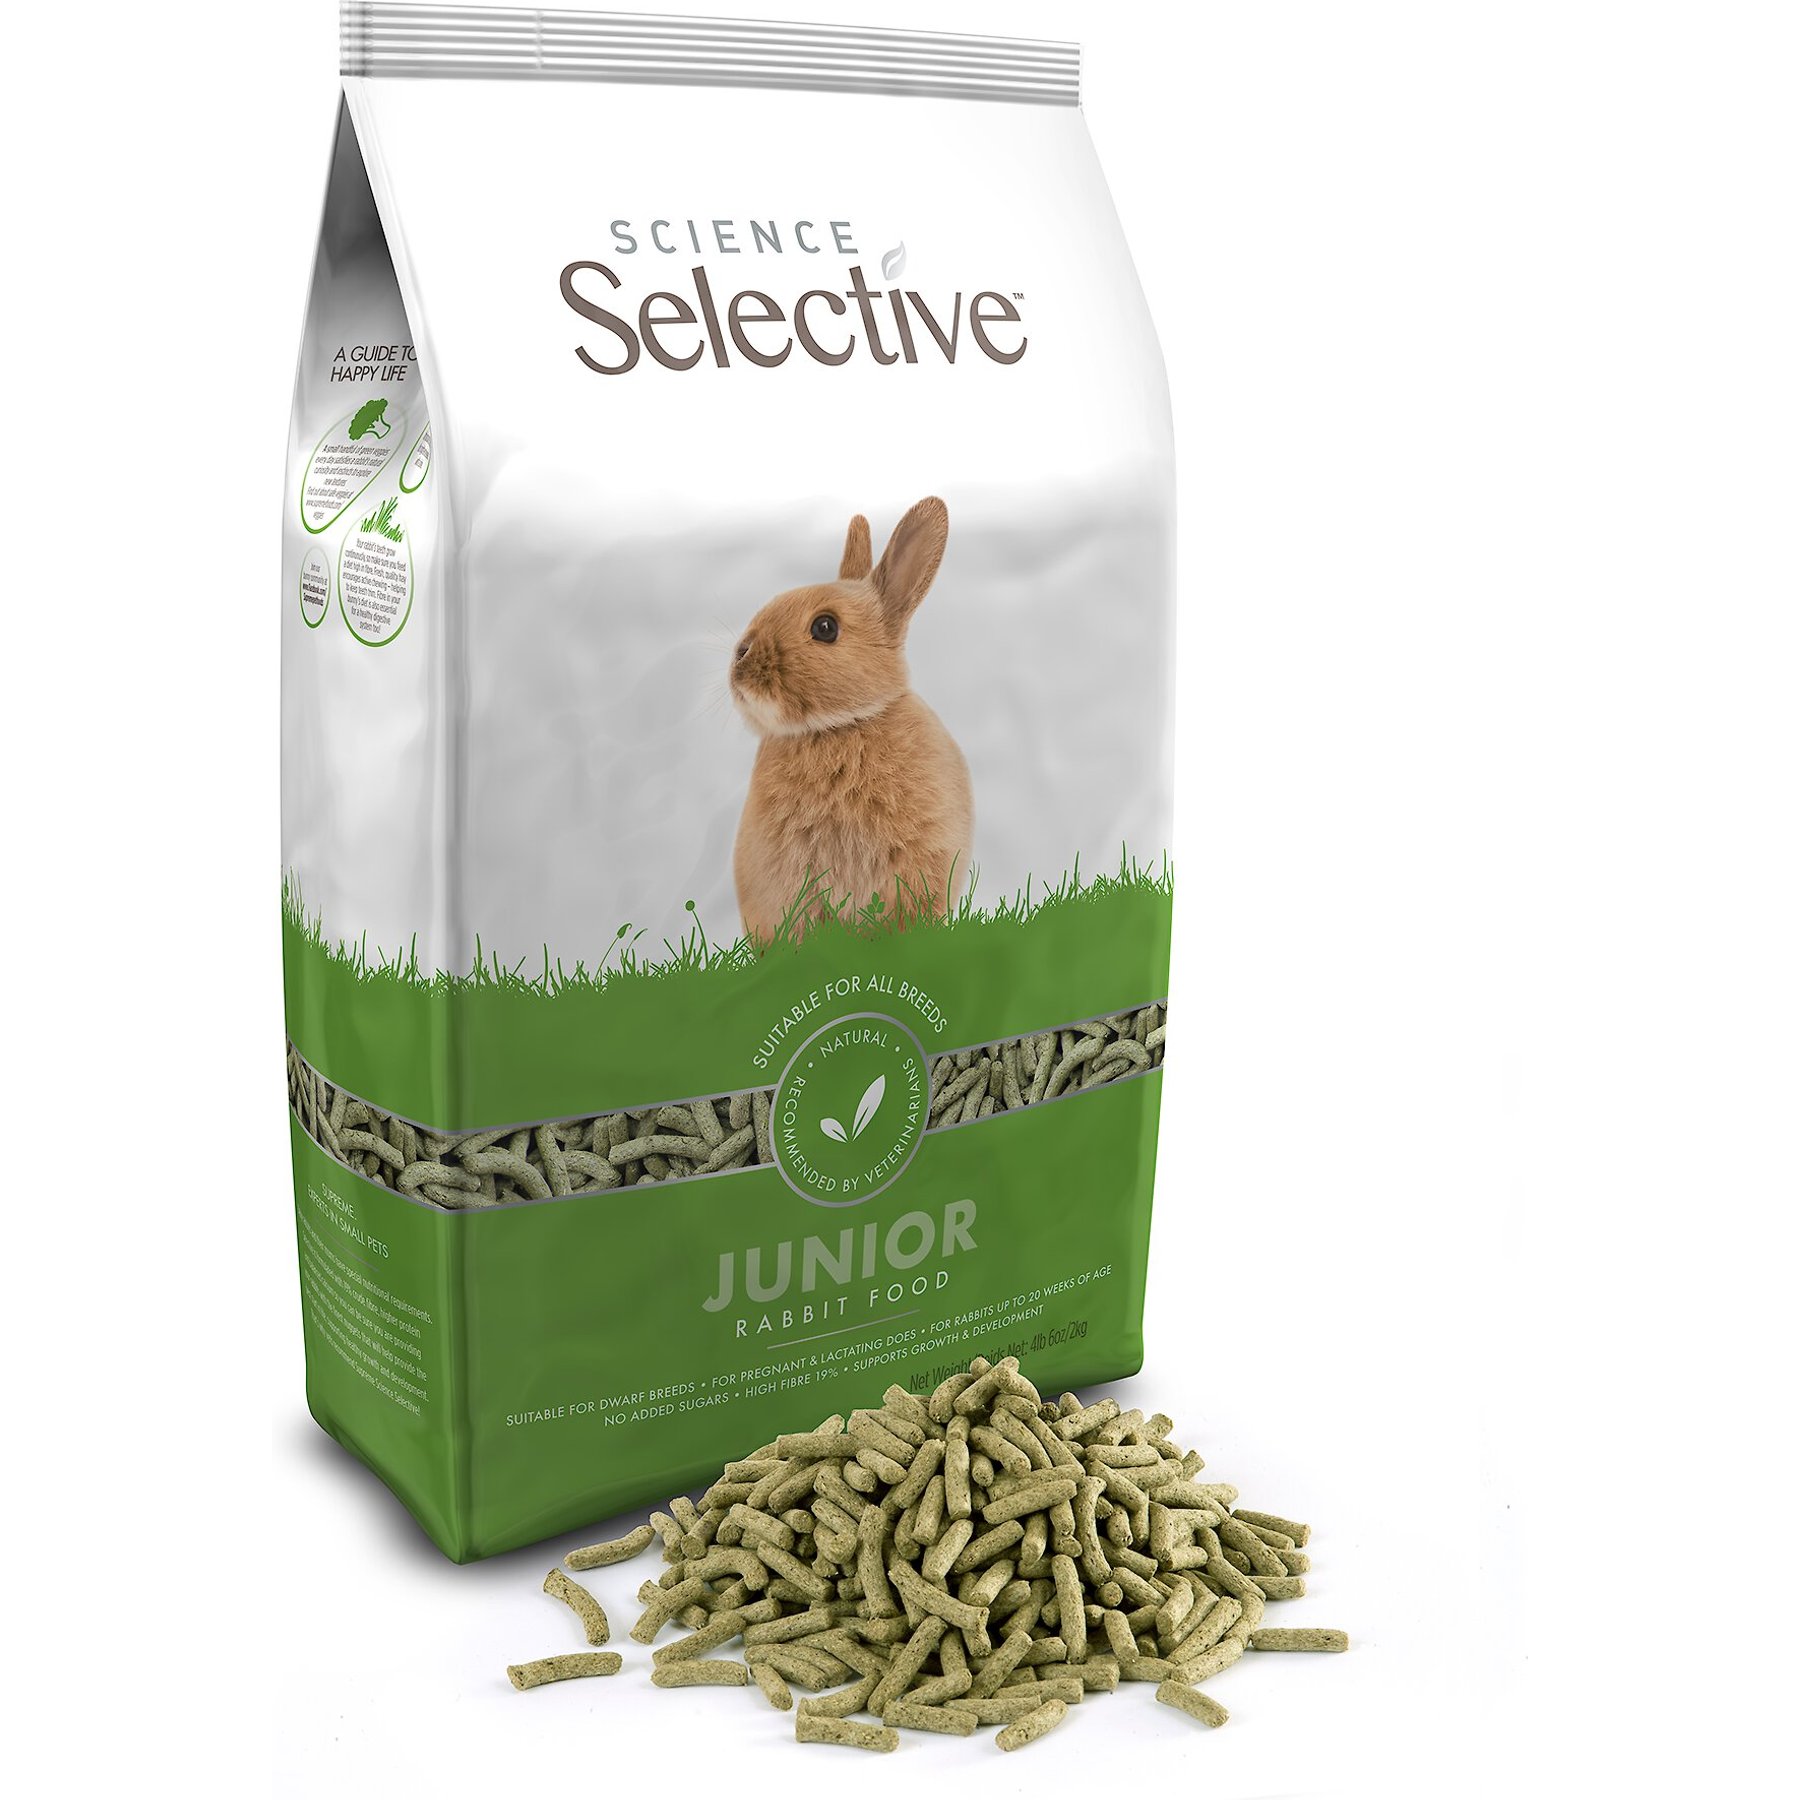 SCIENCE SELECTIVE Junior Rabbit Food, 4.4-lb bag 